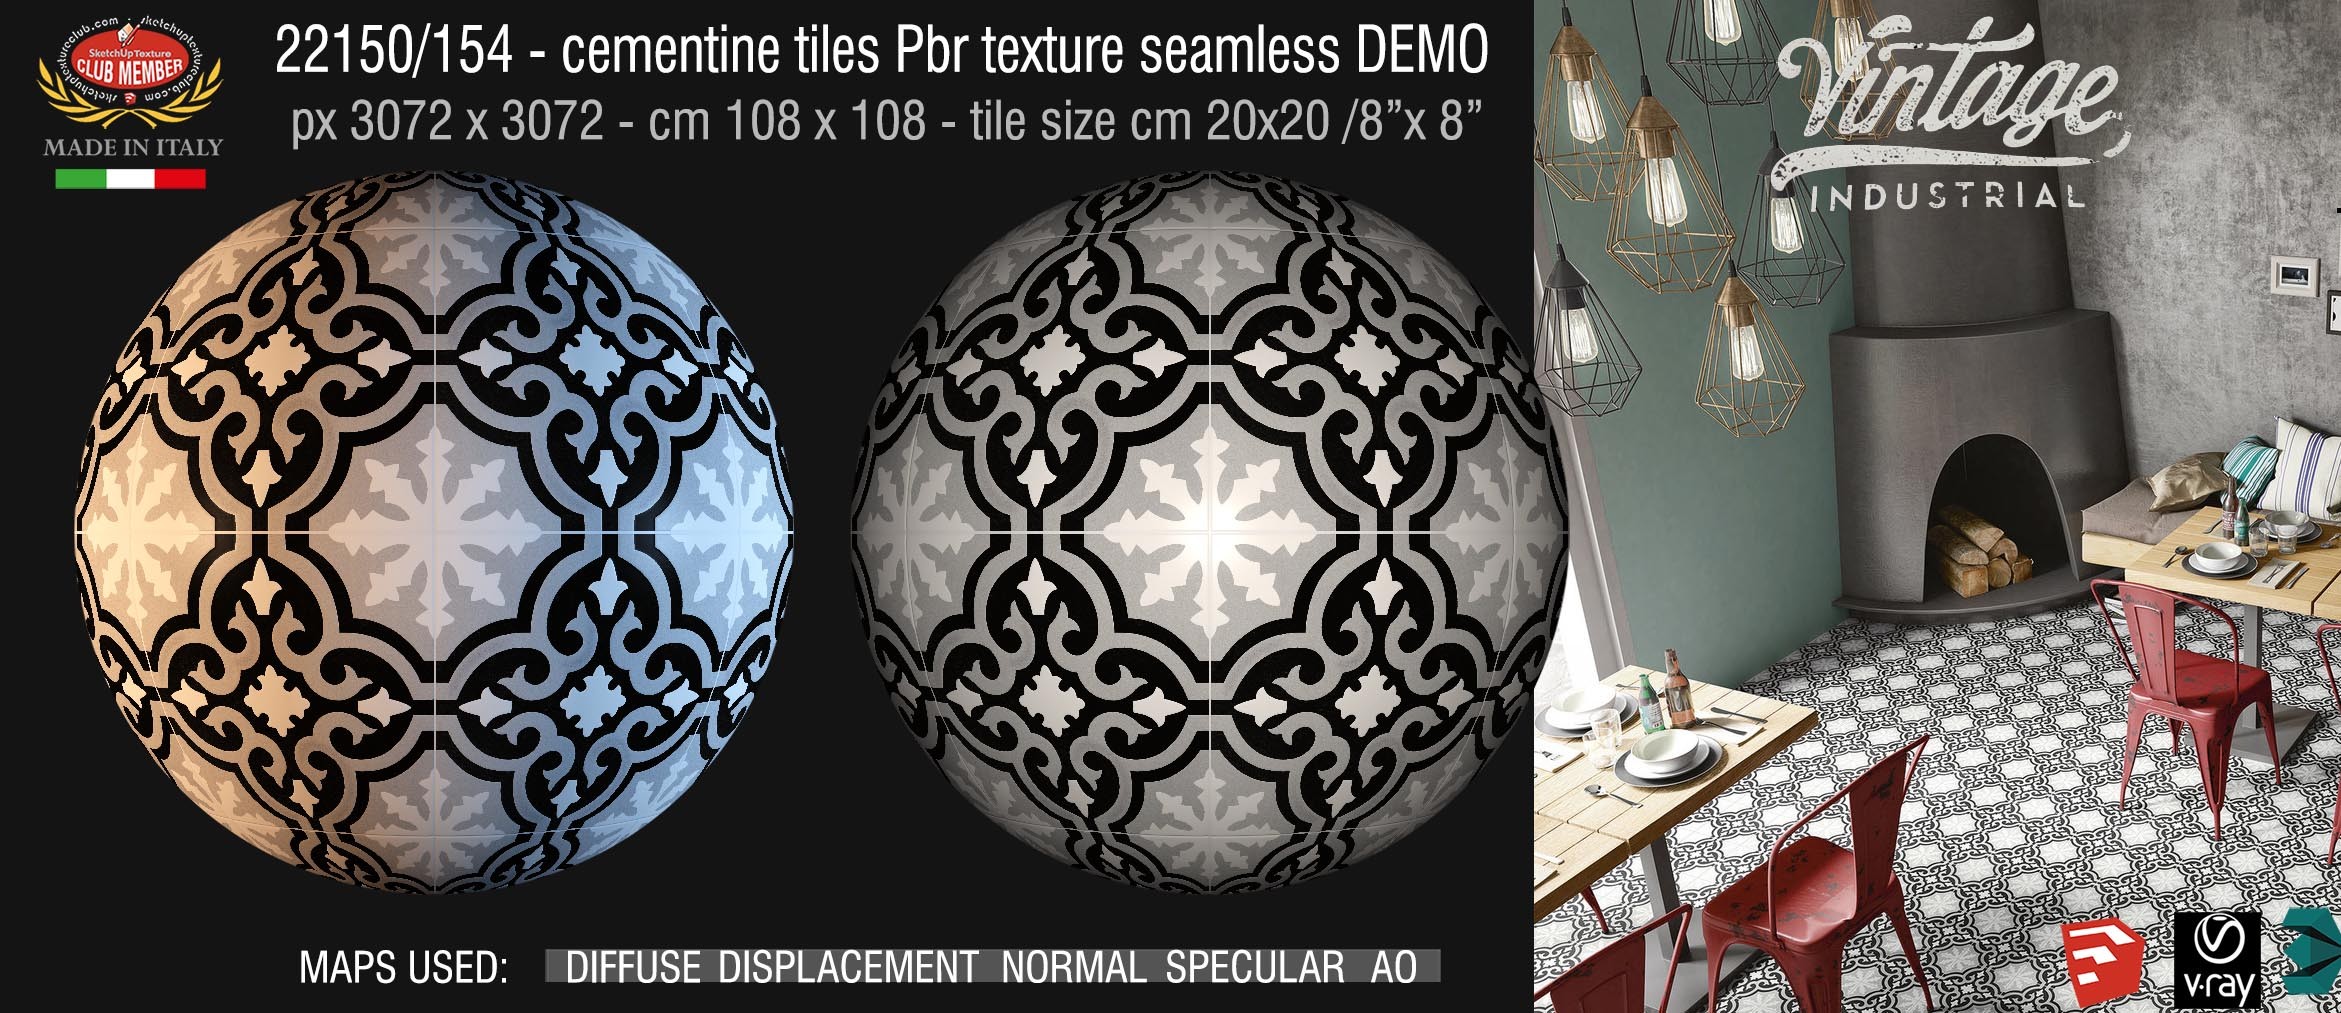 22150/154  Cementine tiles Pbr texture seamless DEMO - porcelain stoneware concrete look